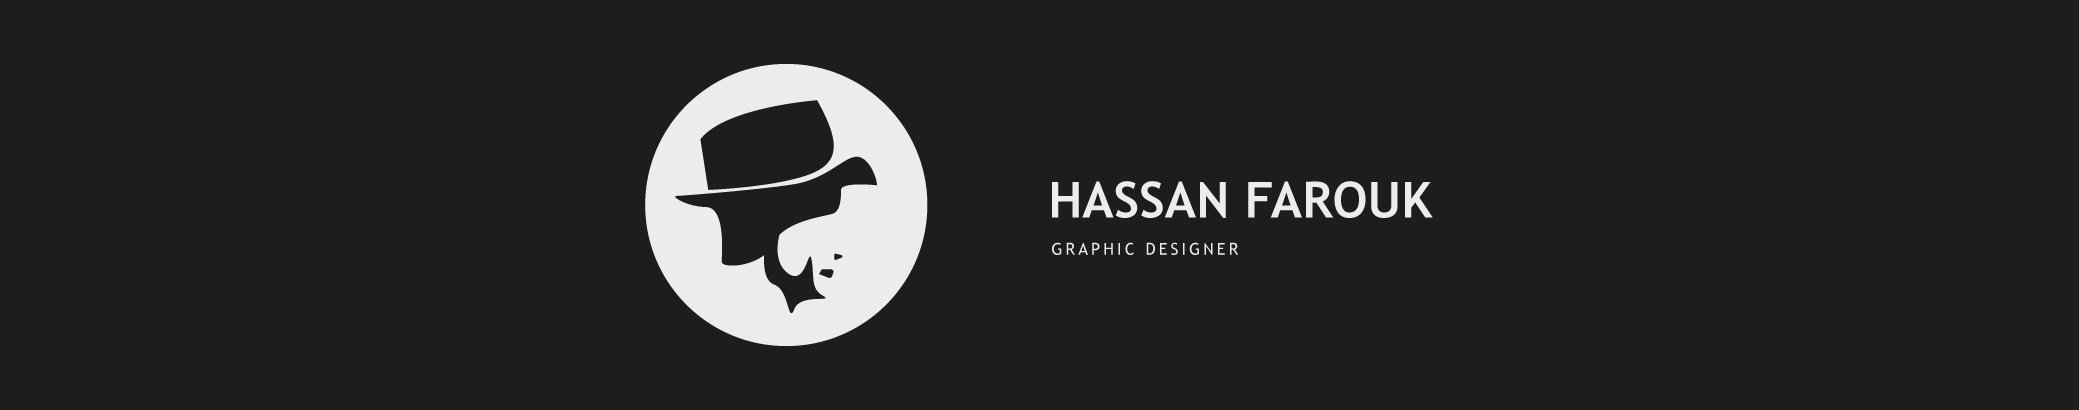 Hassan Farouk's profile banner